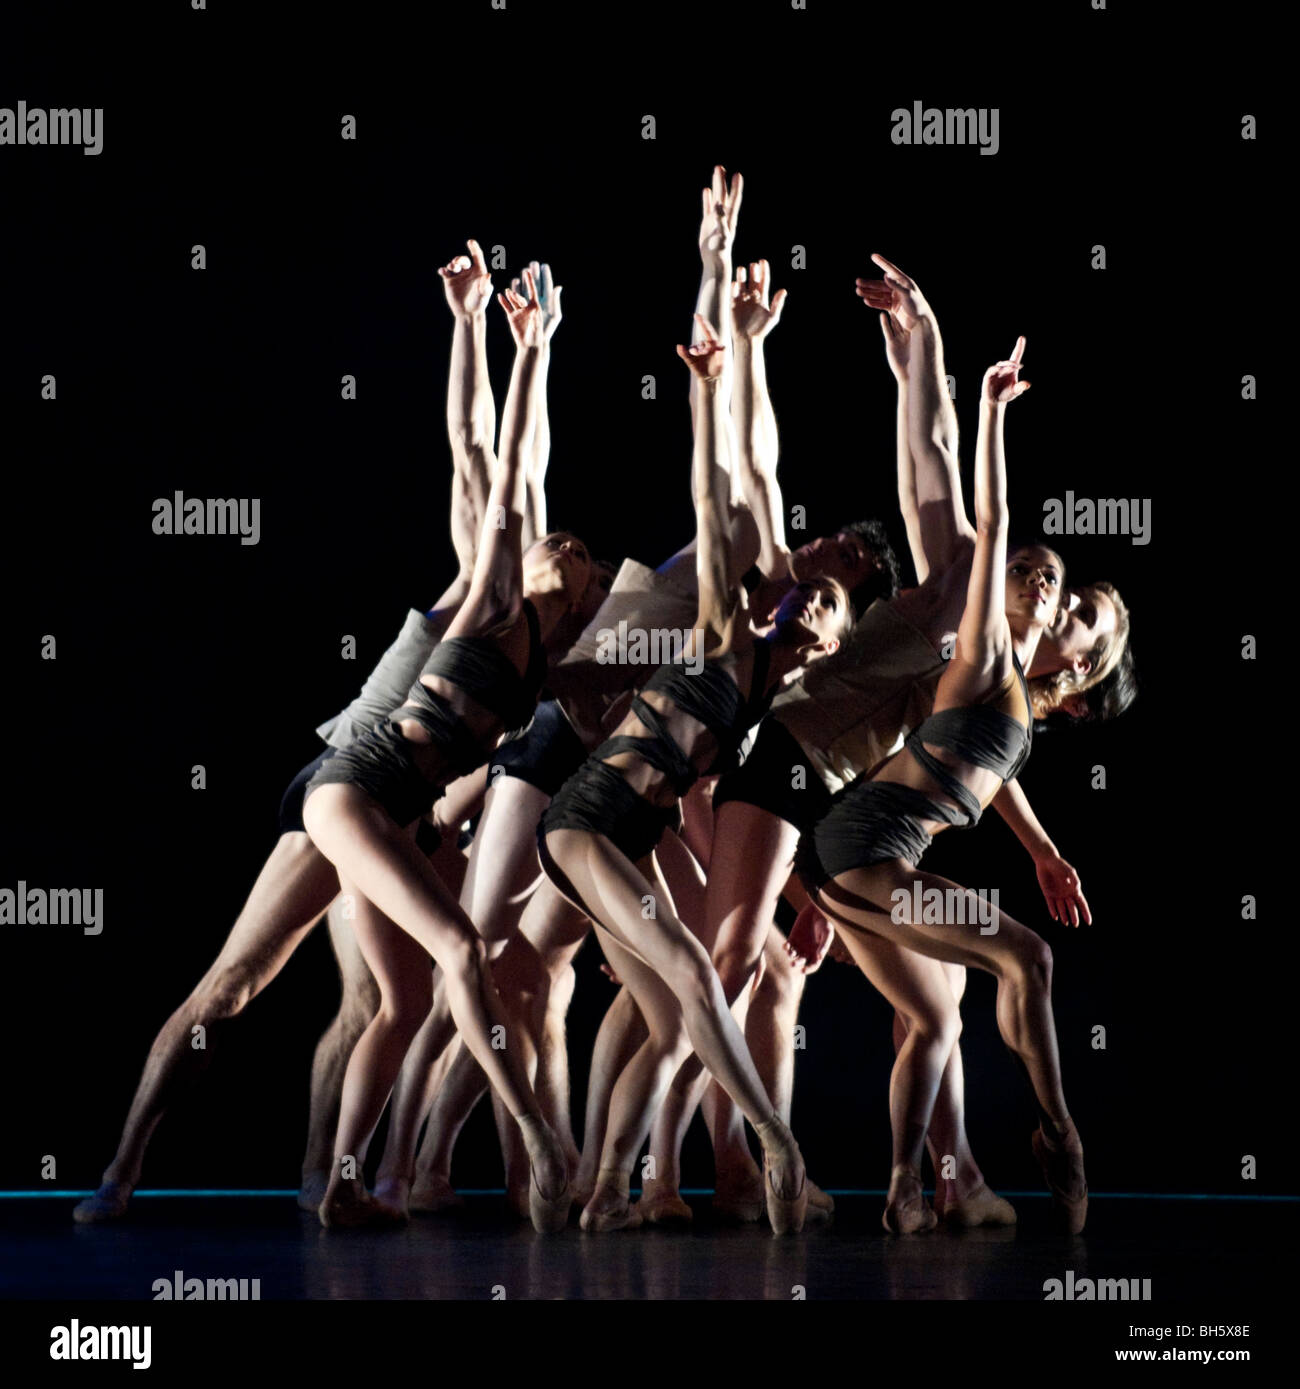 Birmingham Royal Ballet. Quantensprünge. E = MC ². Mass. Stockfoto